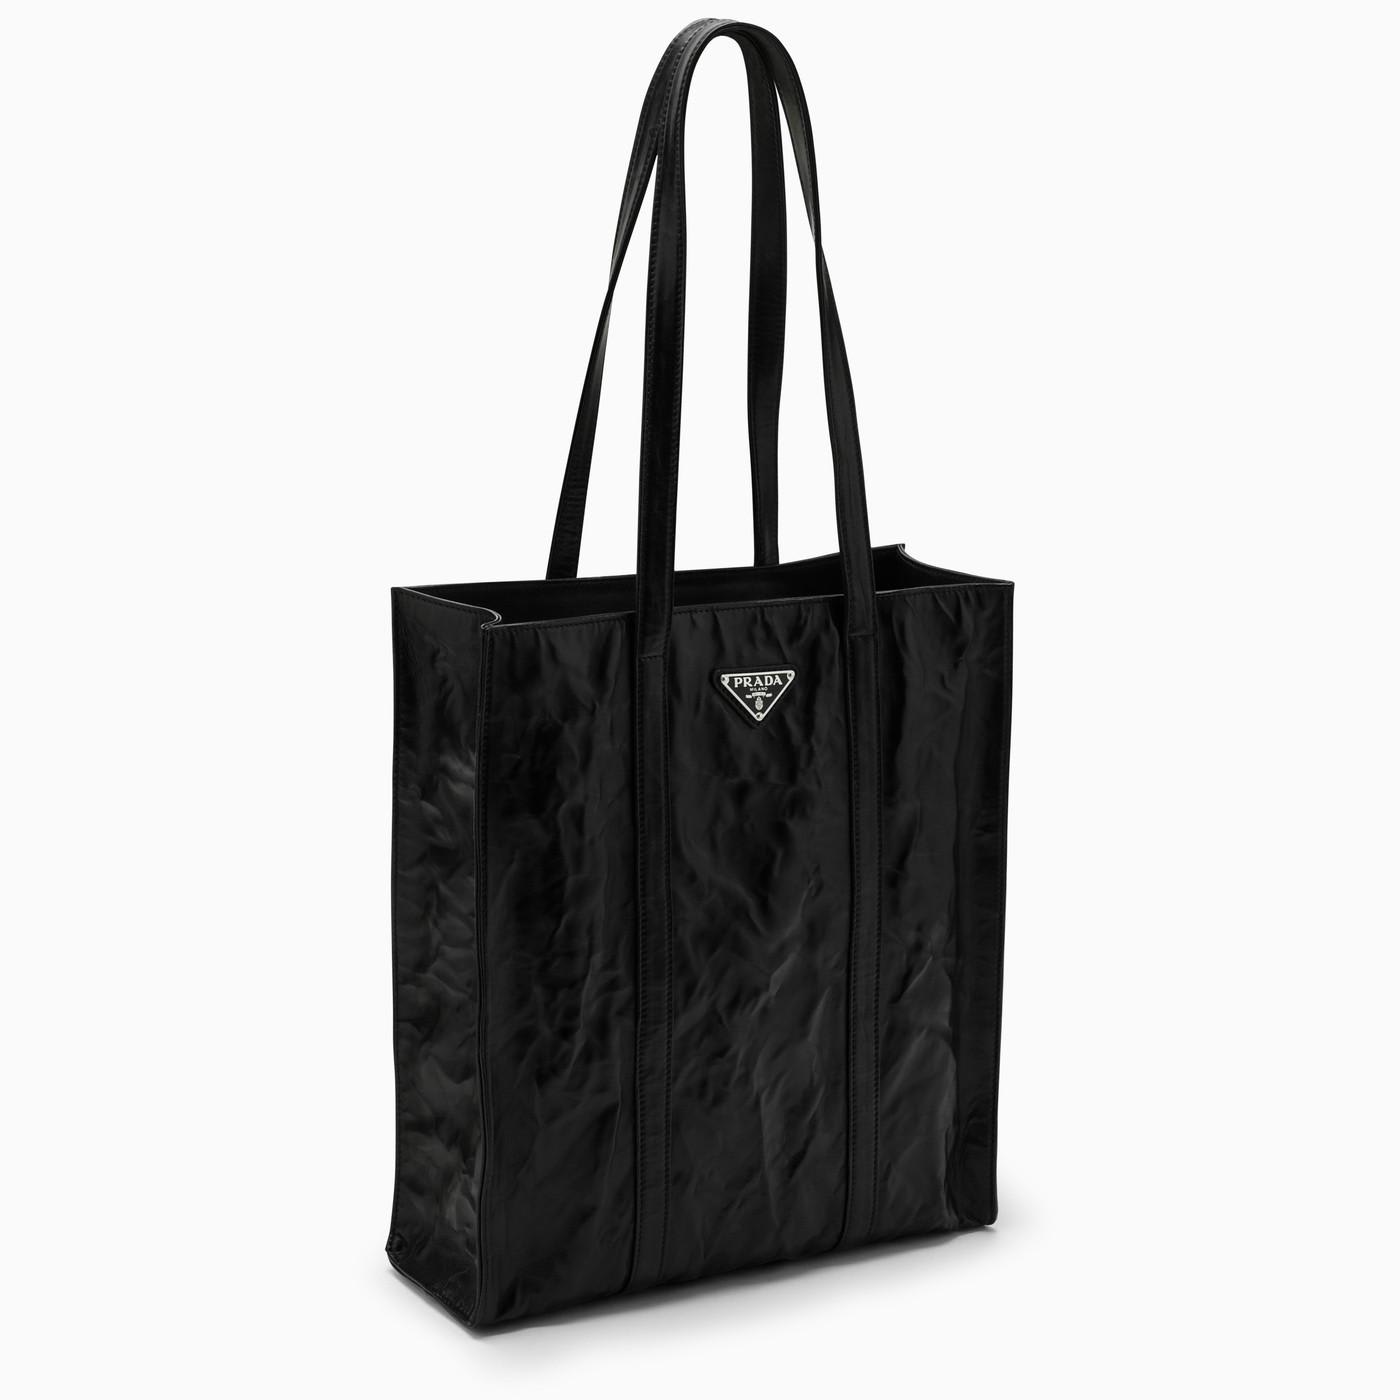 Shop Prada Black Leather Bag